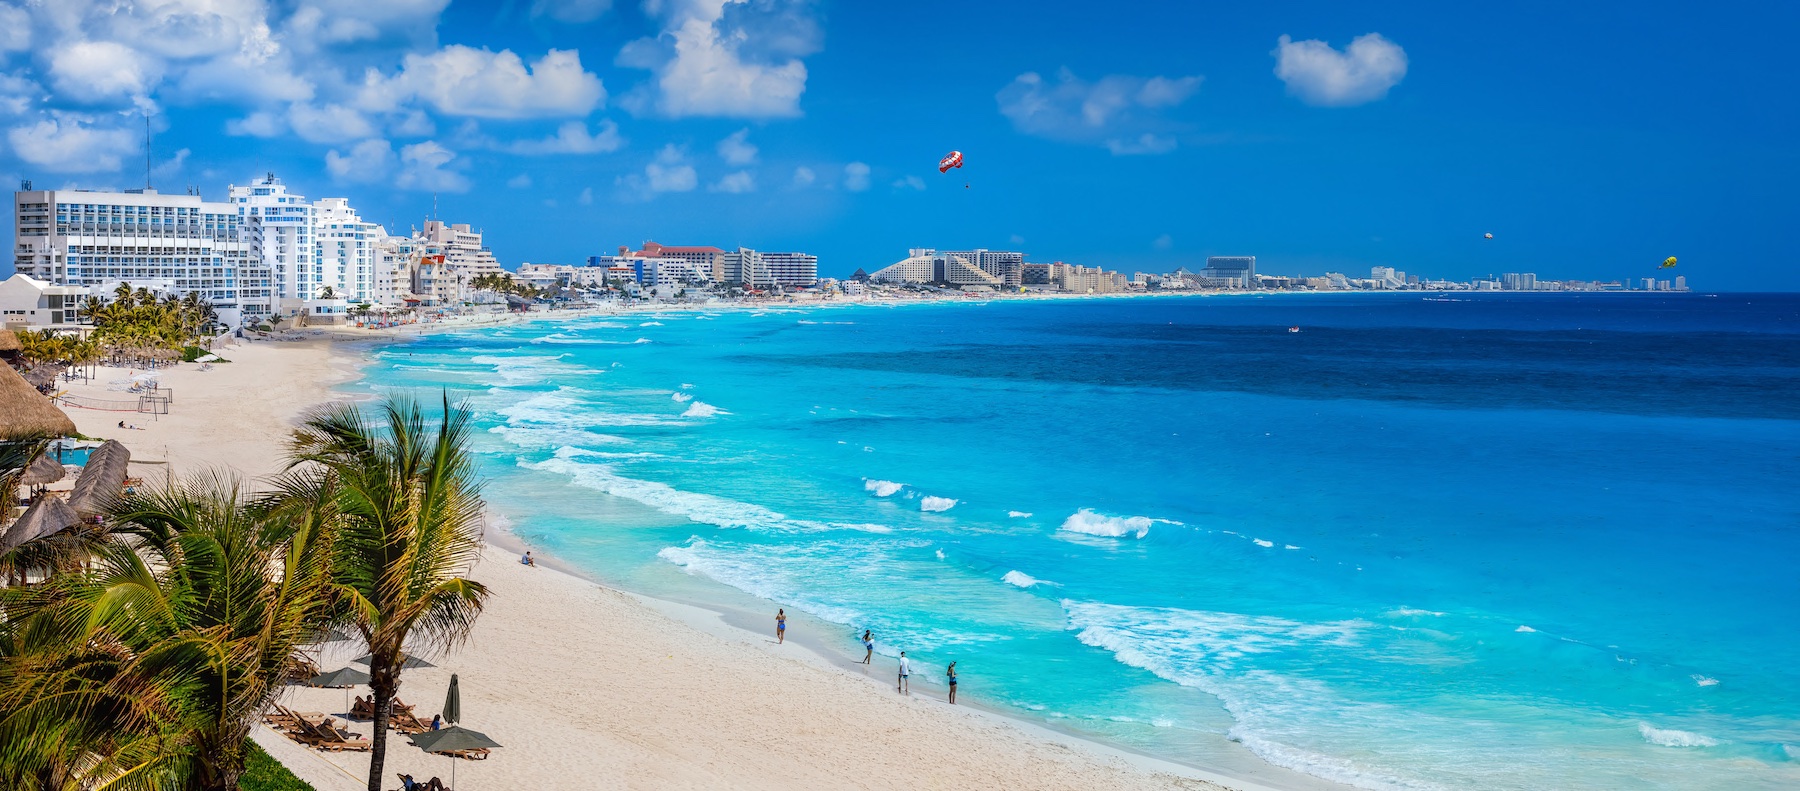 Cancun in Mexico Copyright © AdobeStock 199153230 jdross75